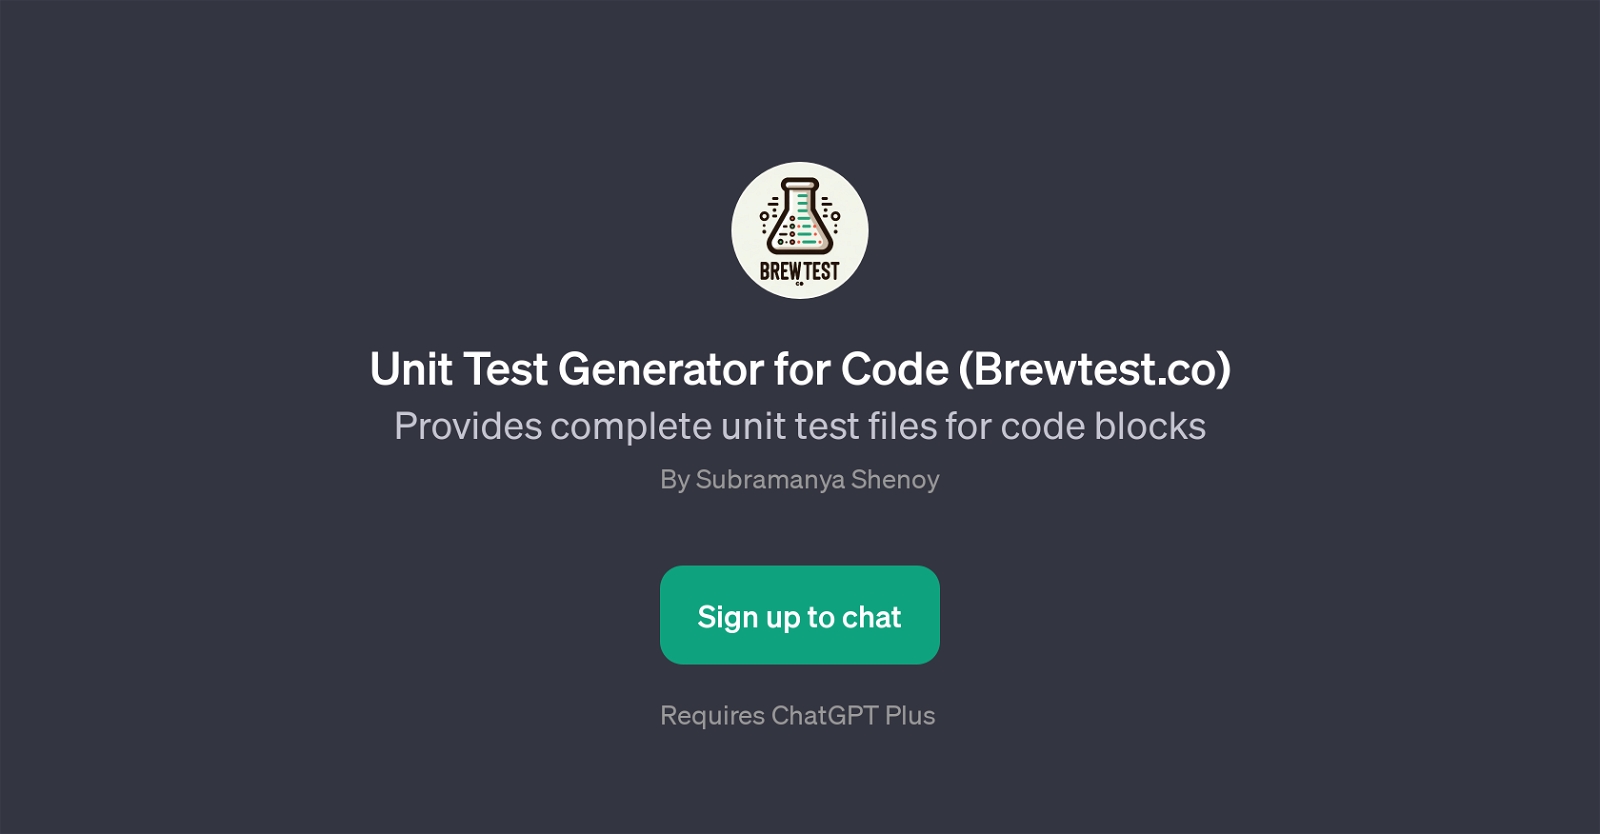 Unit Test Generator for Code (Brewtest.co) website